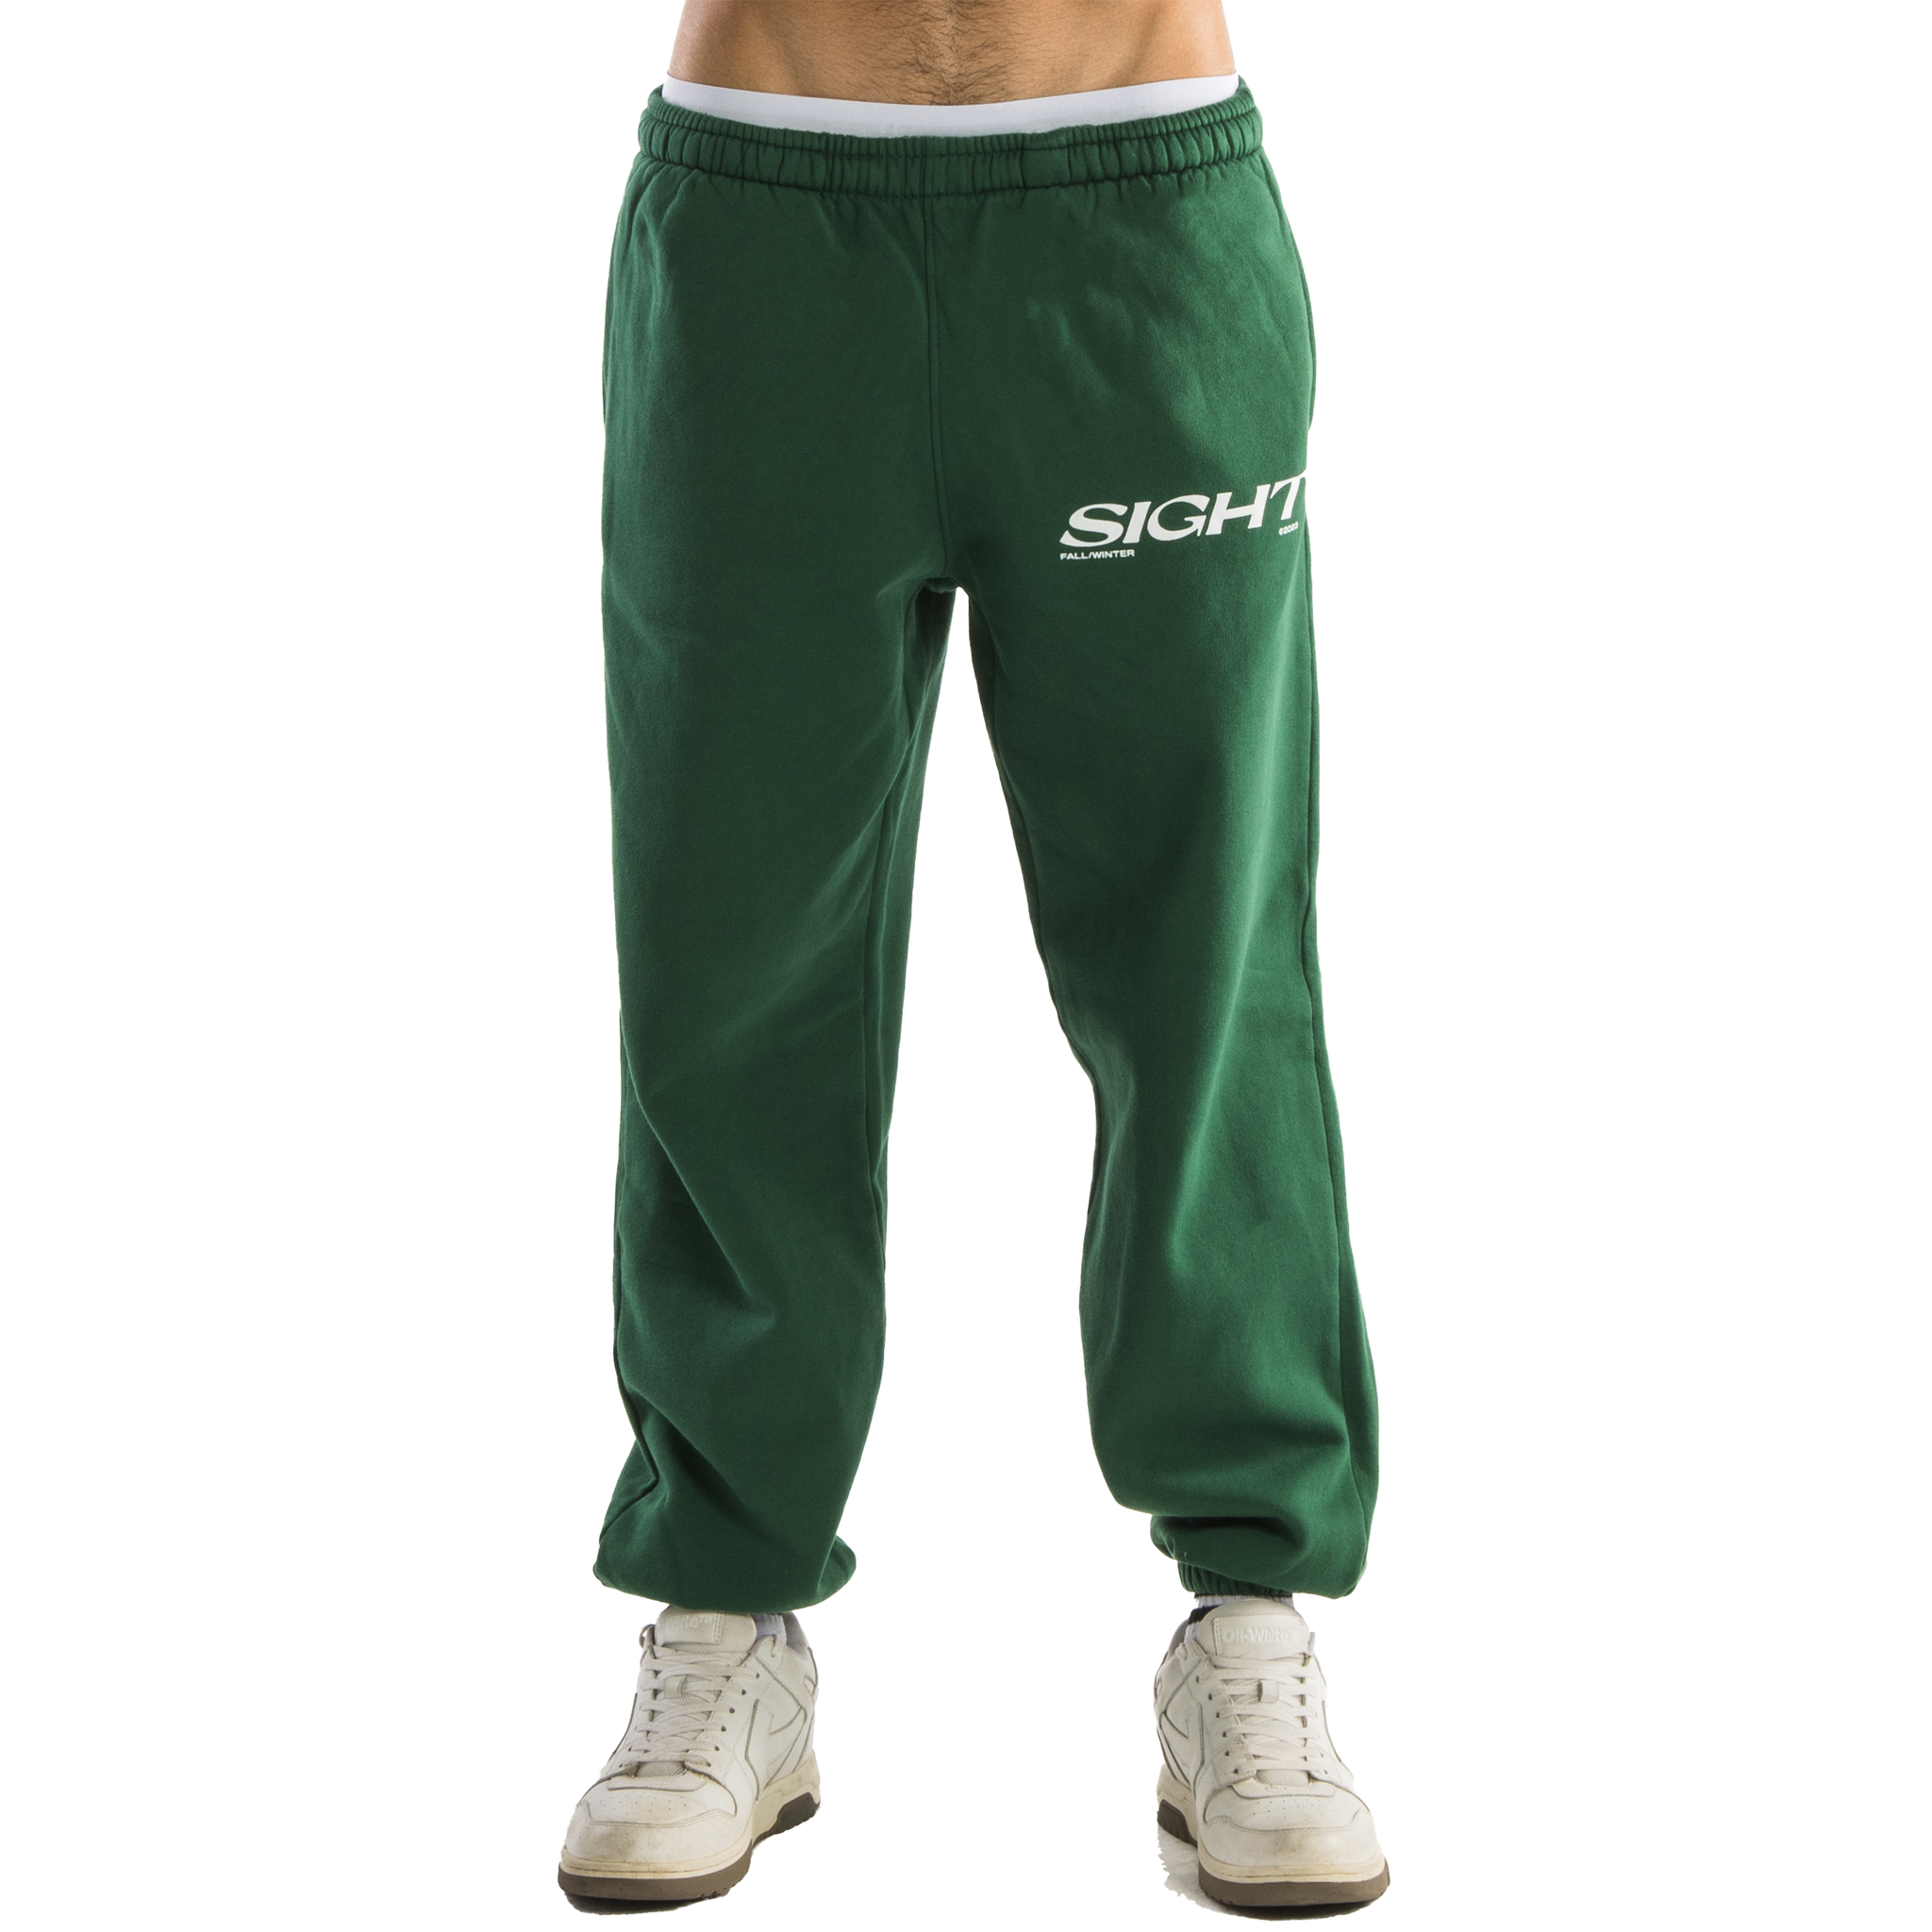 SIGHT Team "Green" Sweatpants